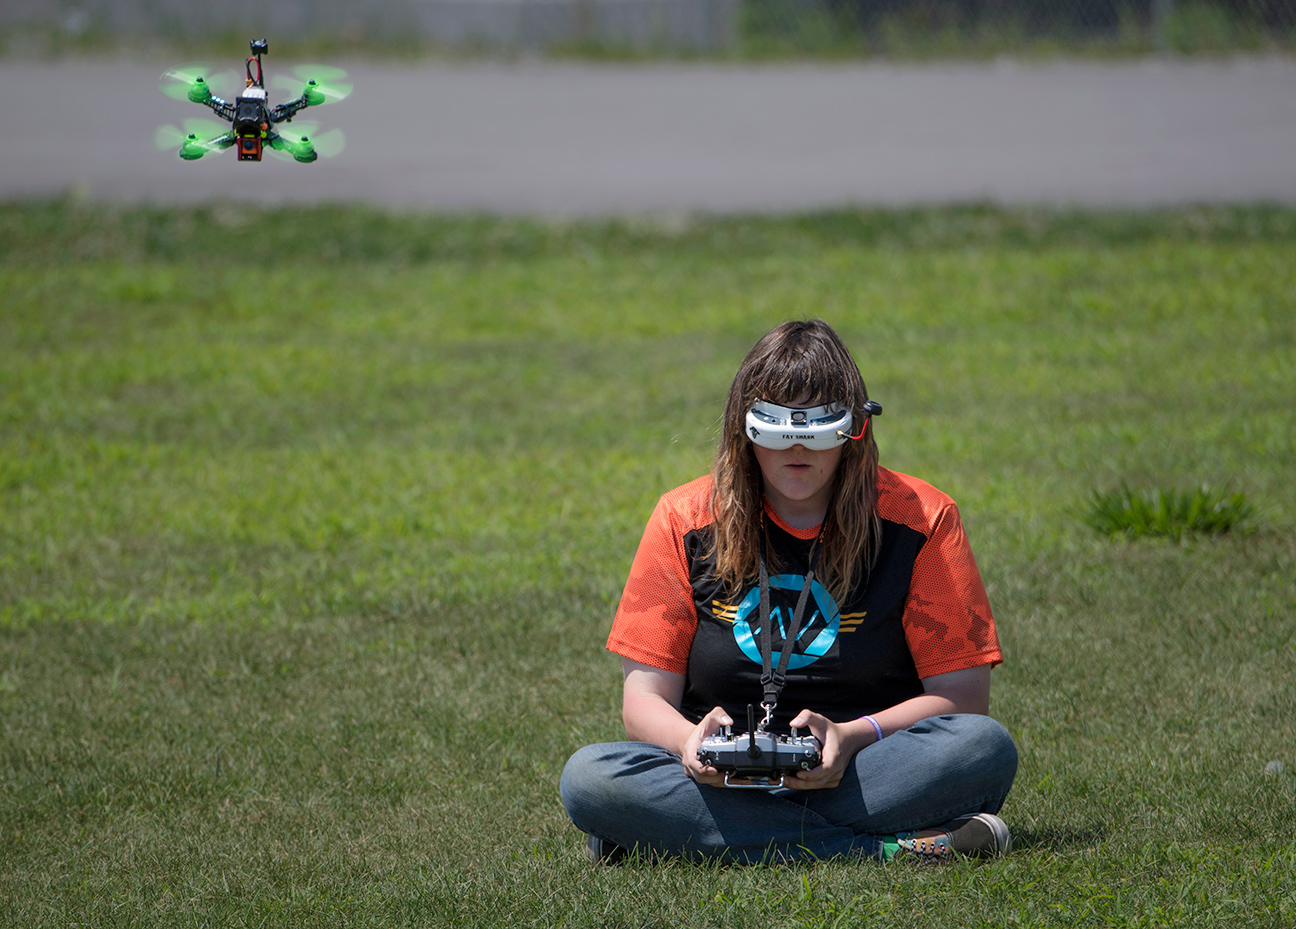 Drone Racing National Championships on Governors Island